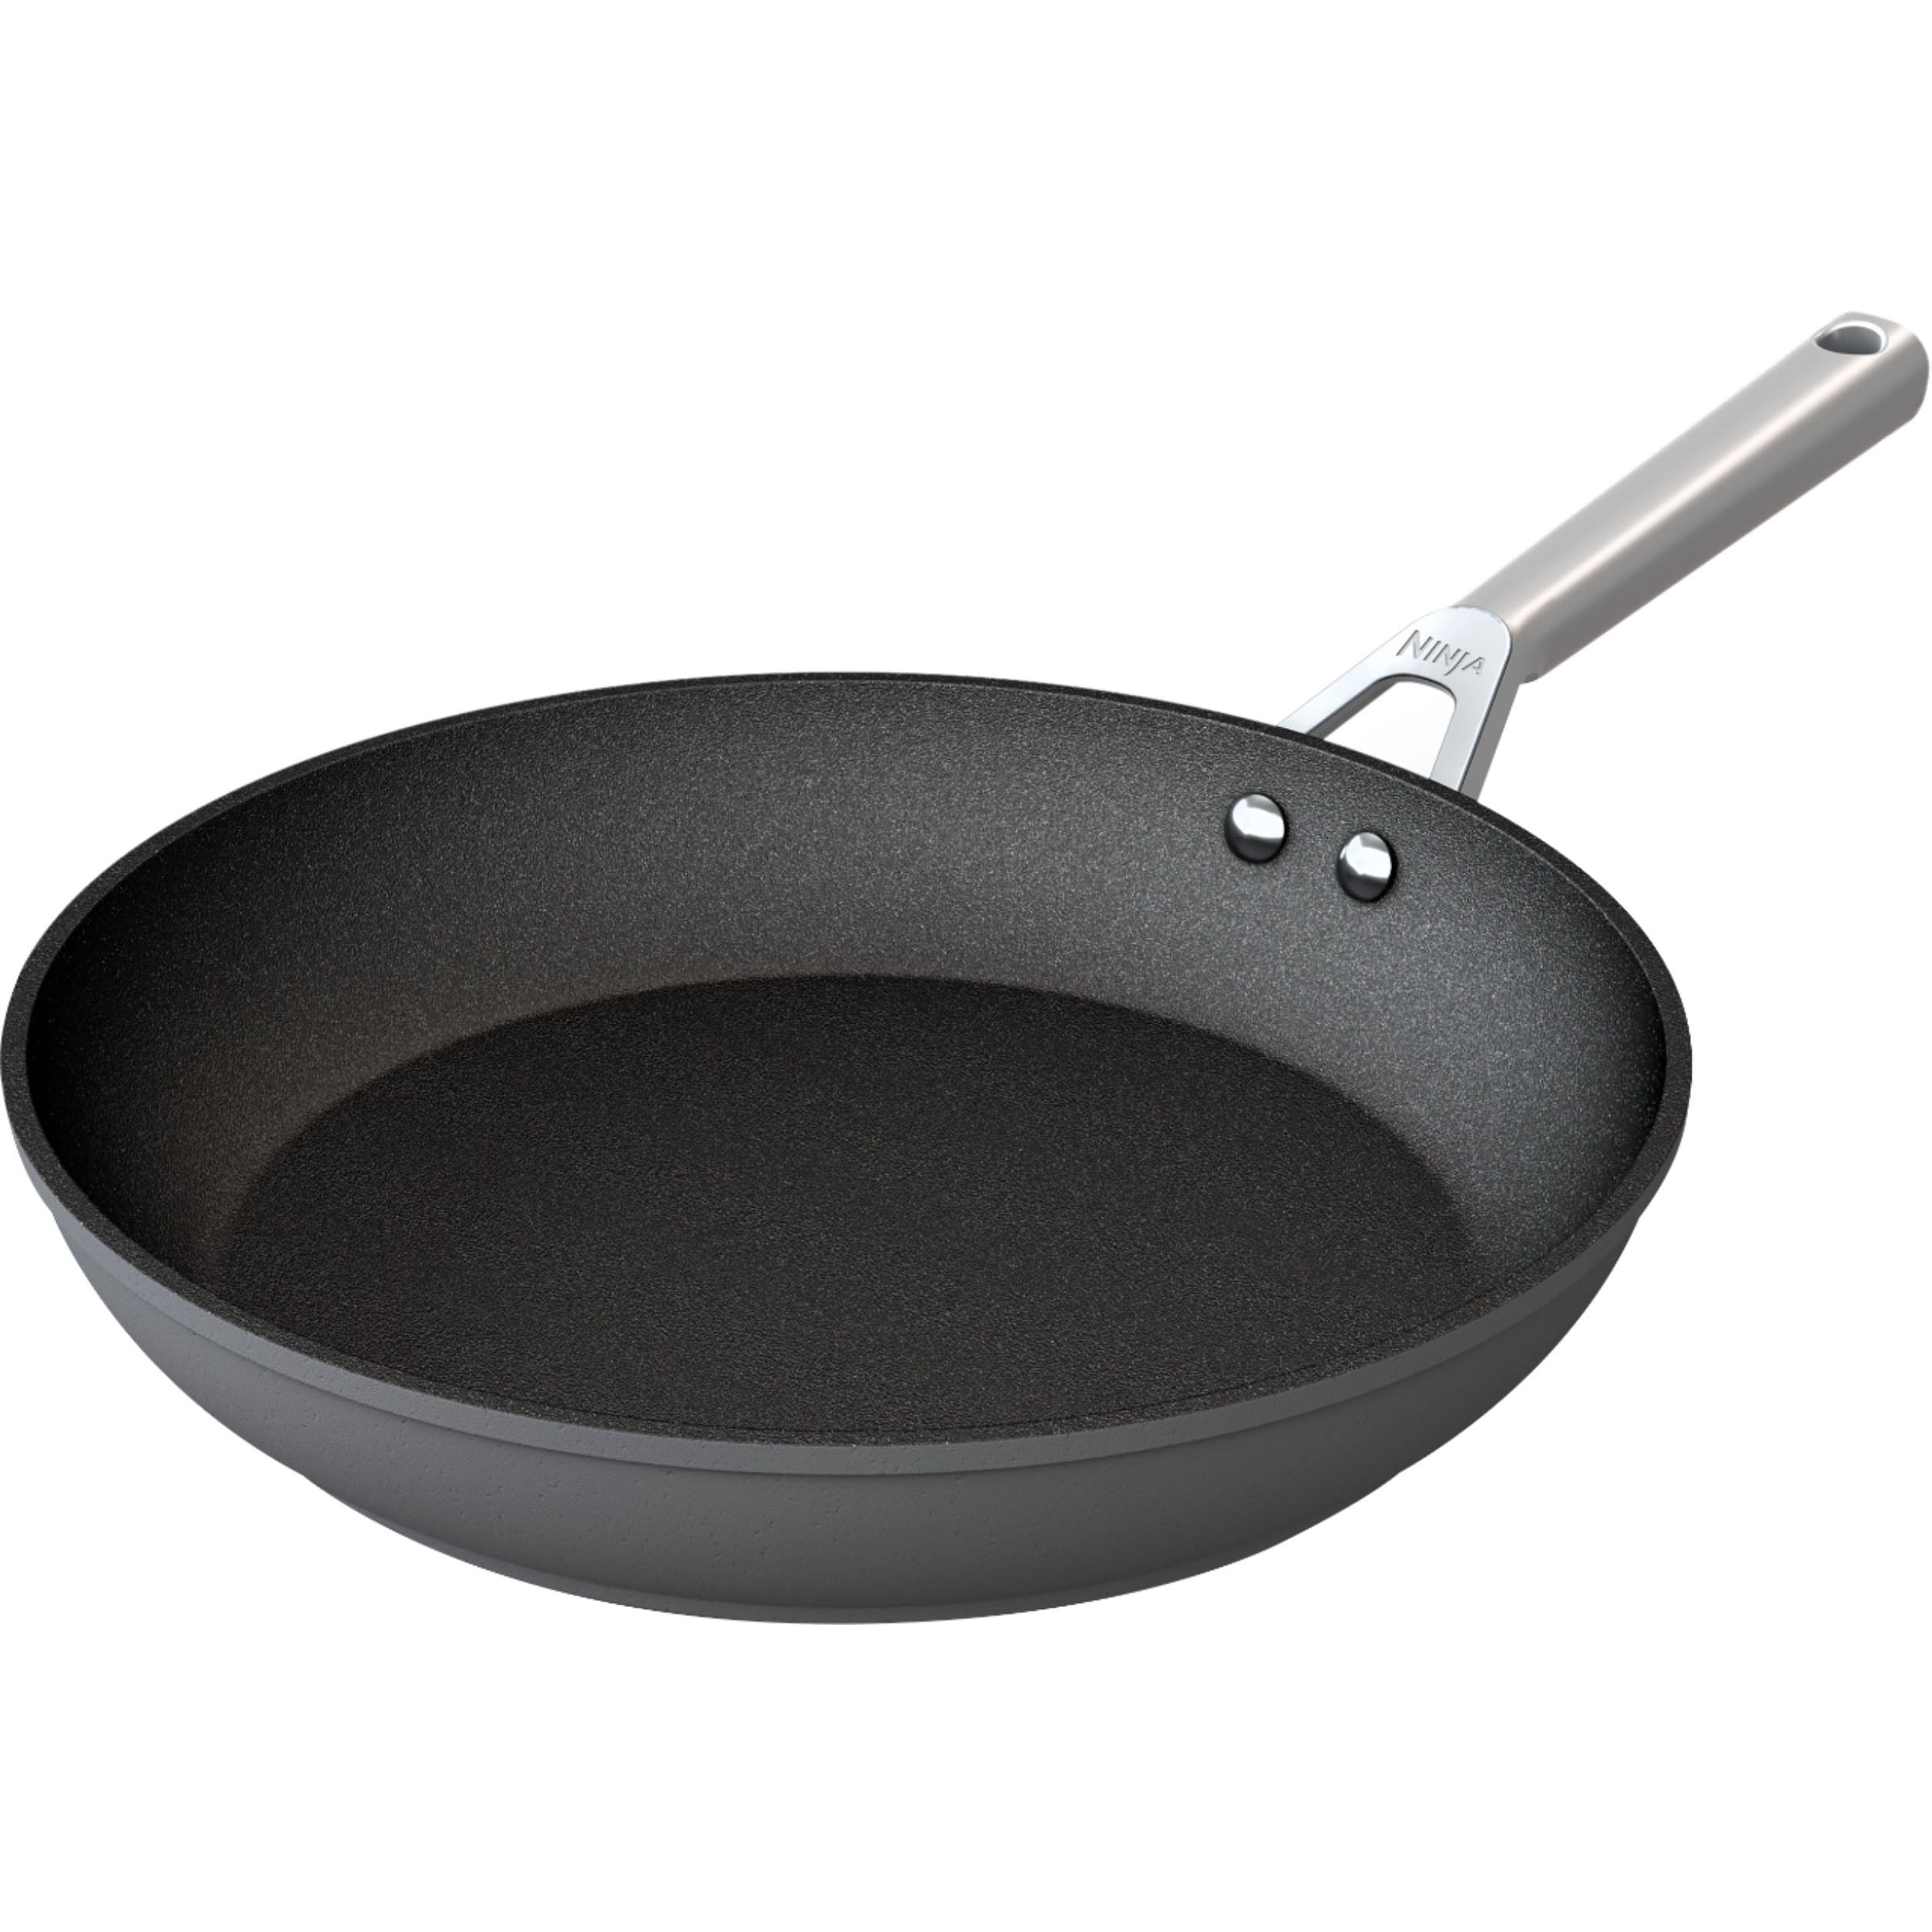 Ninja® Cookware Set - Black, 10 pc - Kroger